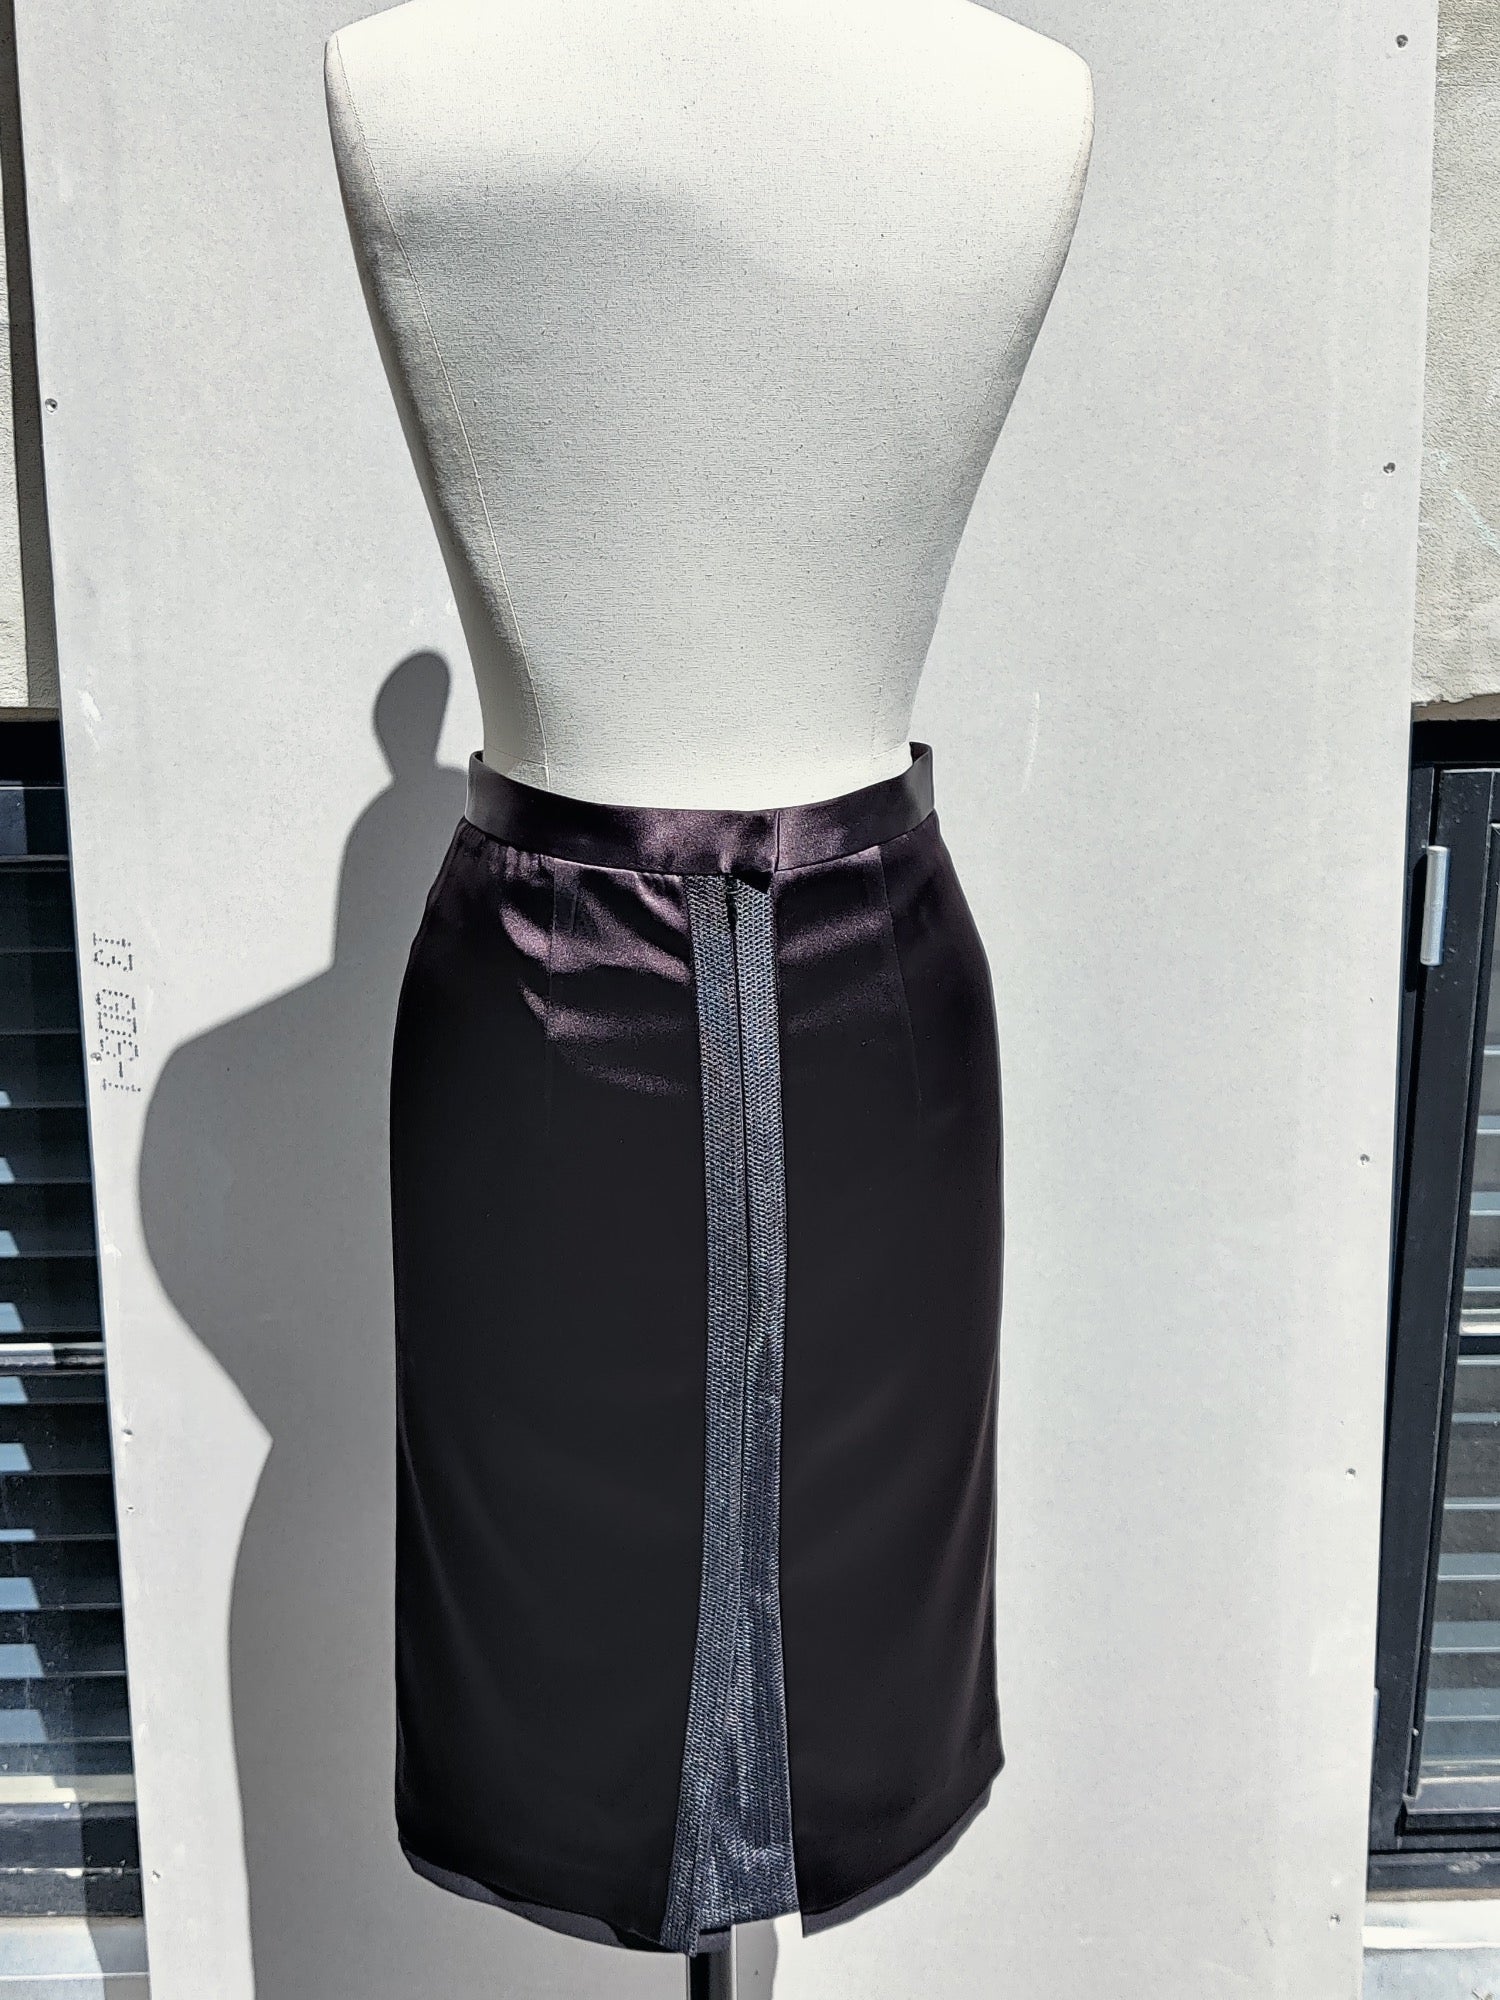 Back view: The Annouk pencil skirt has a classic center back split. .